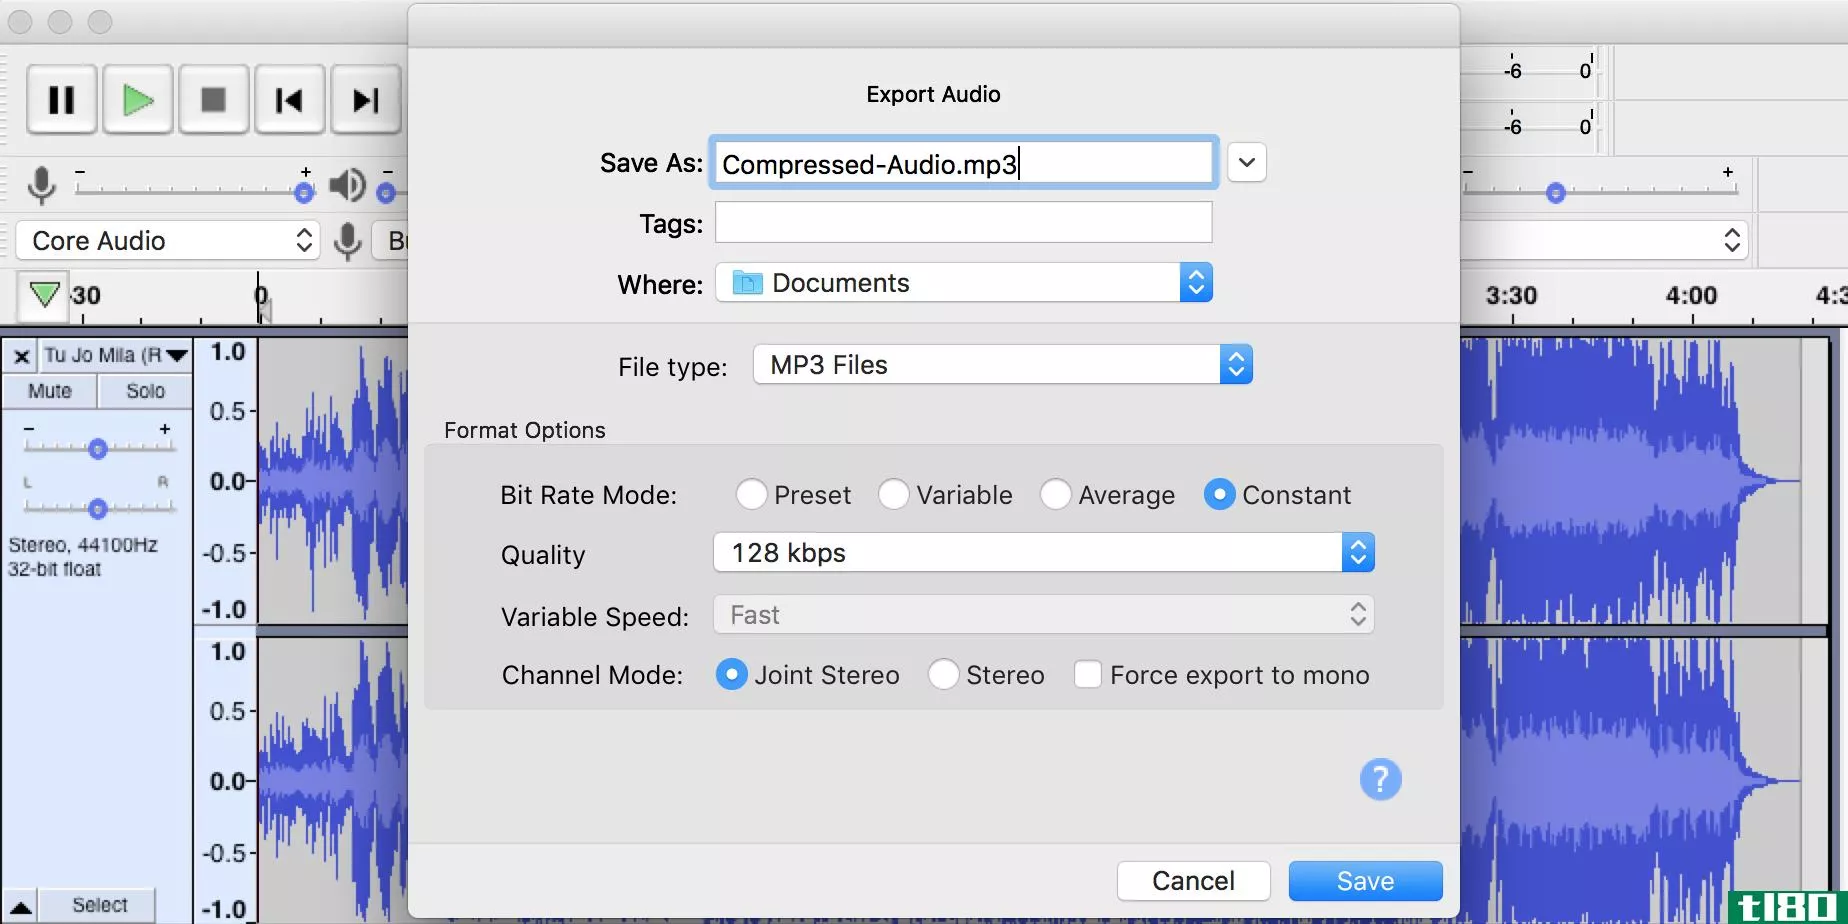 Compress audio on a Mac